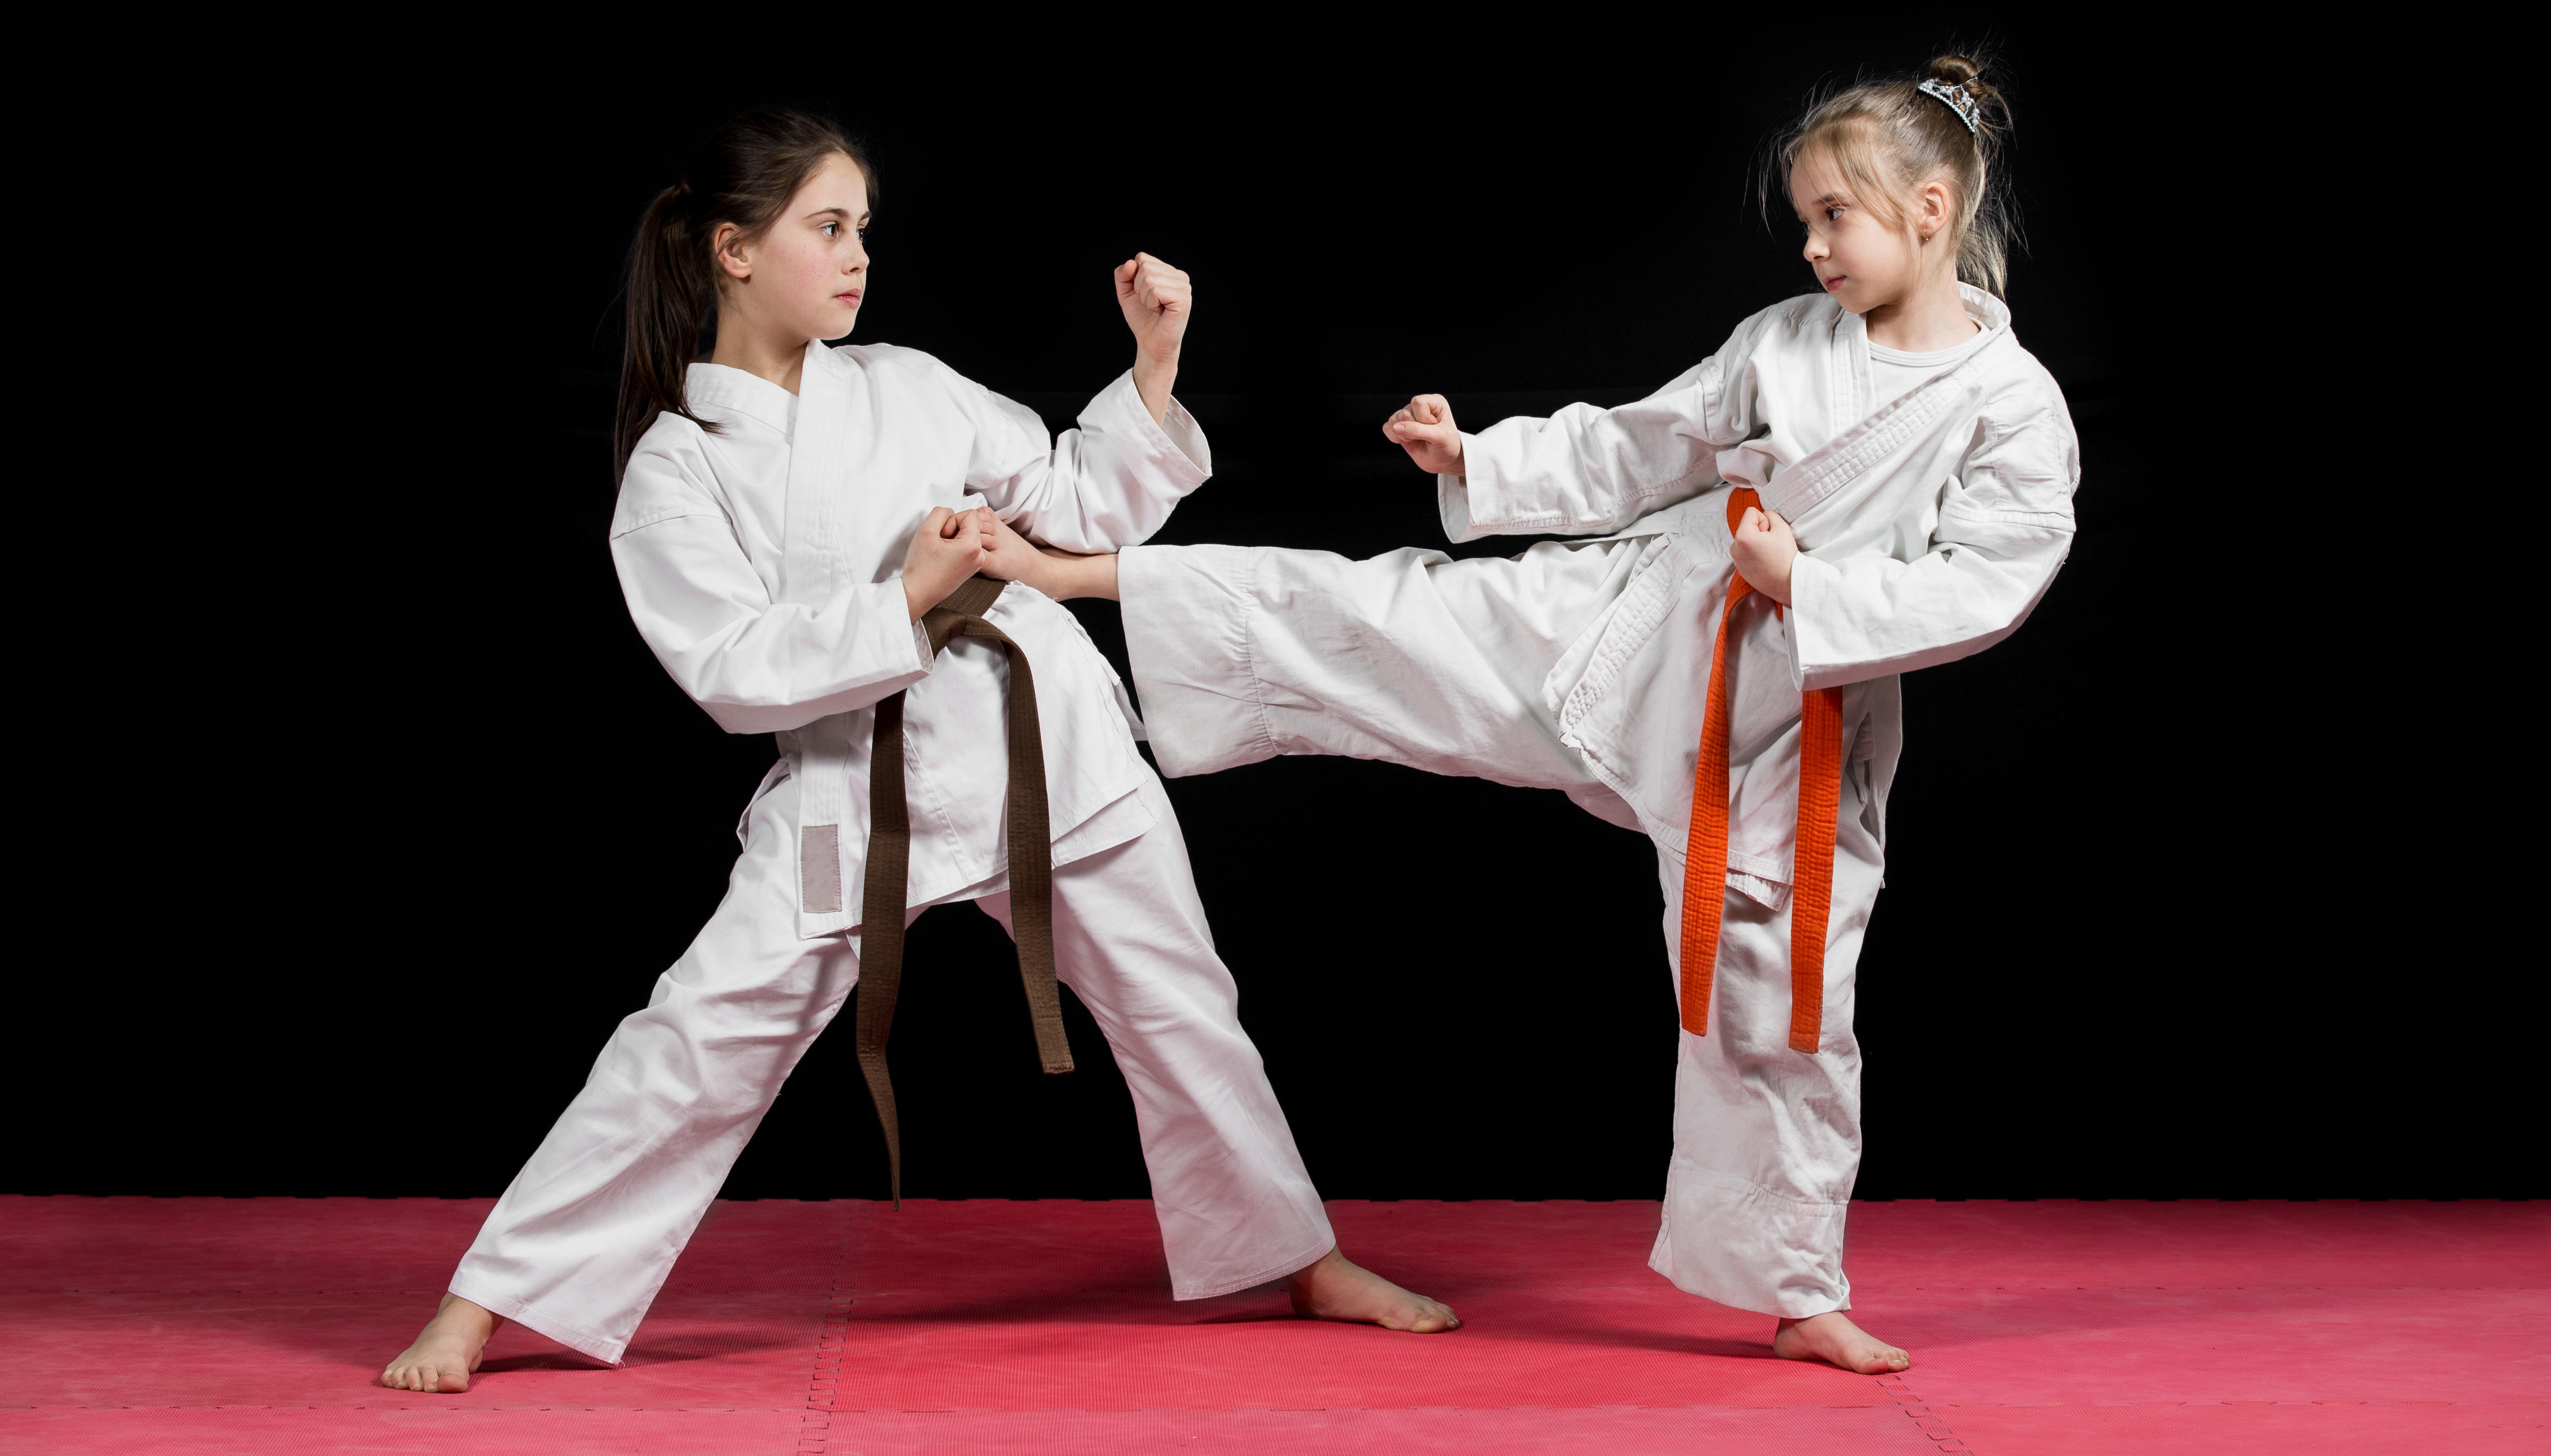 Proponer Fielmente Estrella Martial arts can pose serious dangers for kids - CBS News